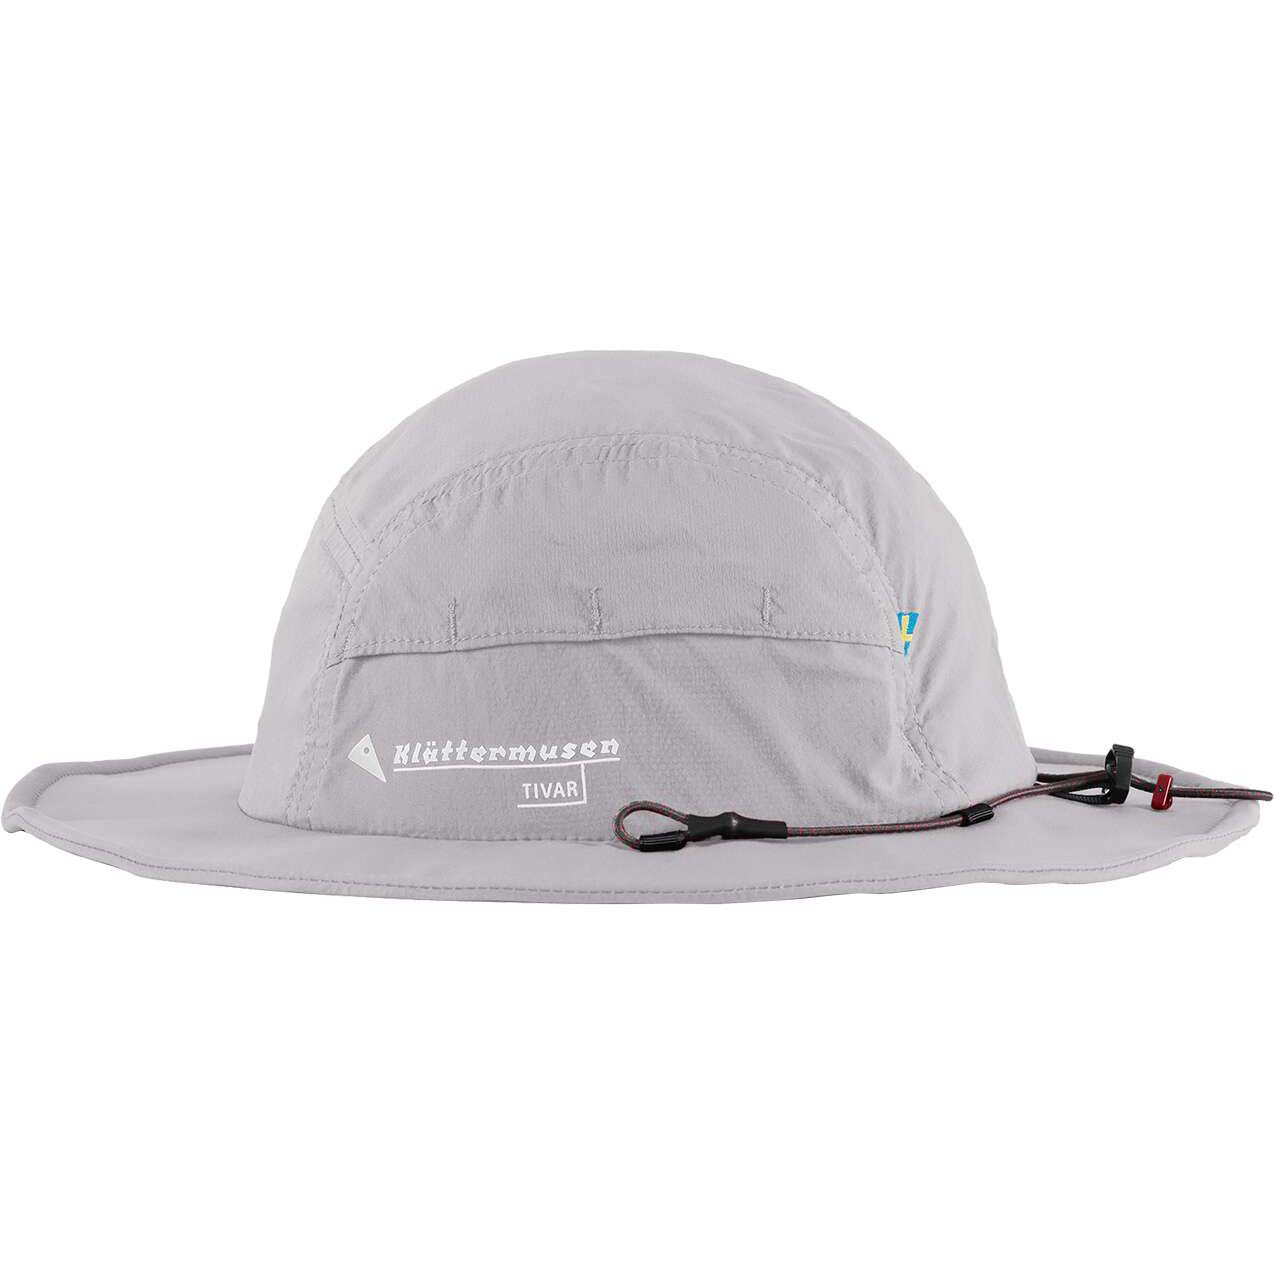 Klattermusen Tivar Unisex Quick-Drying Hat